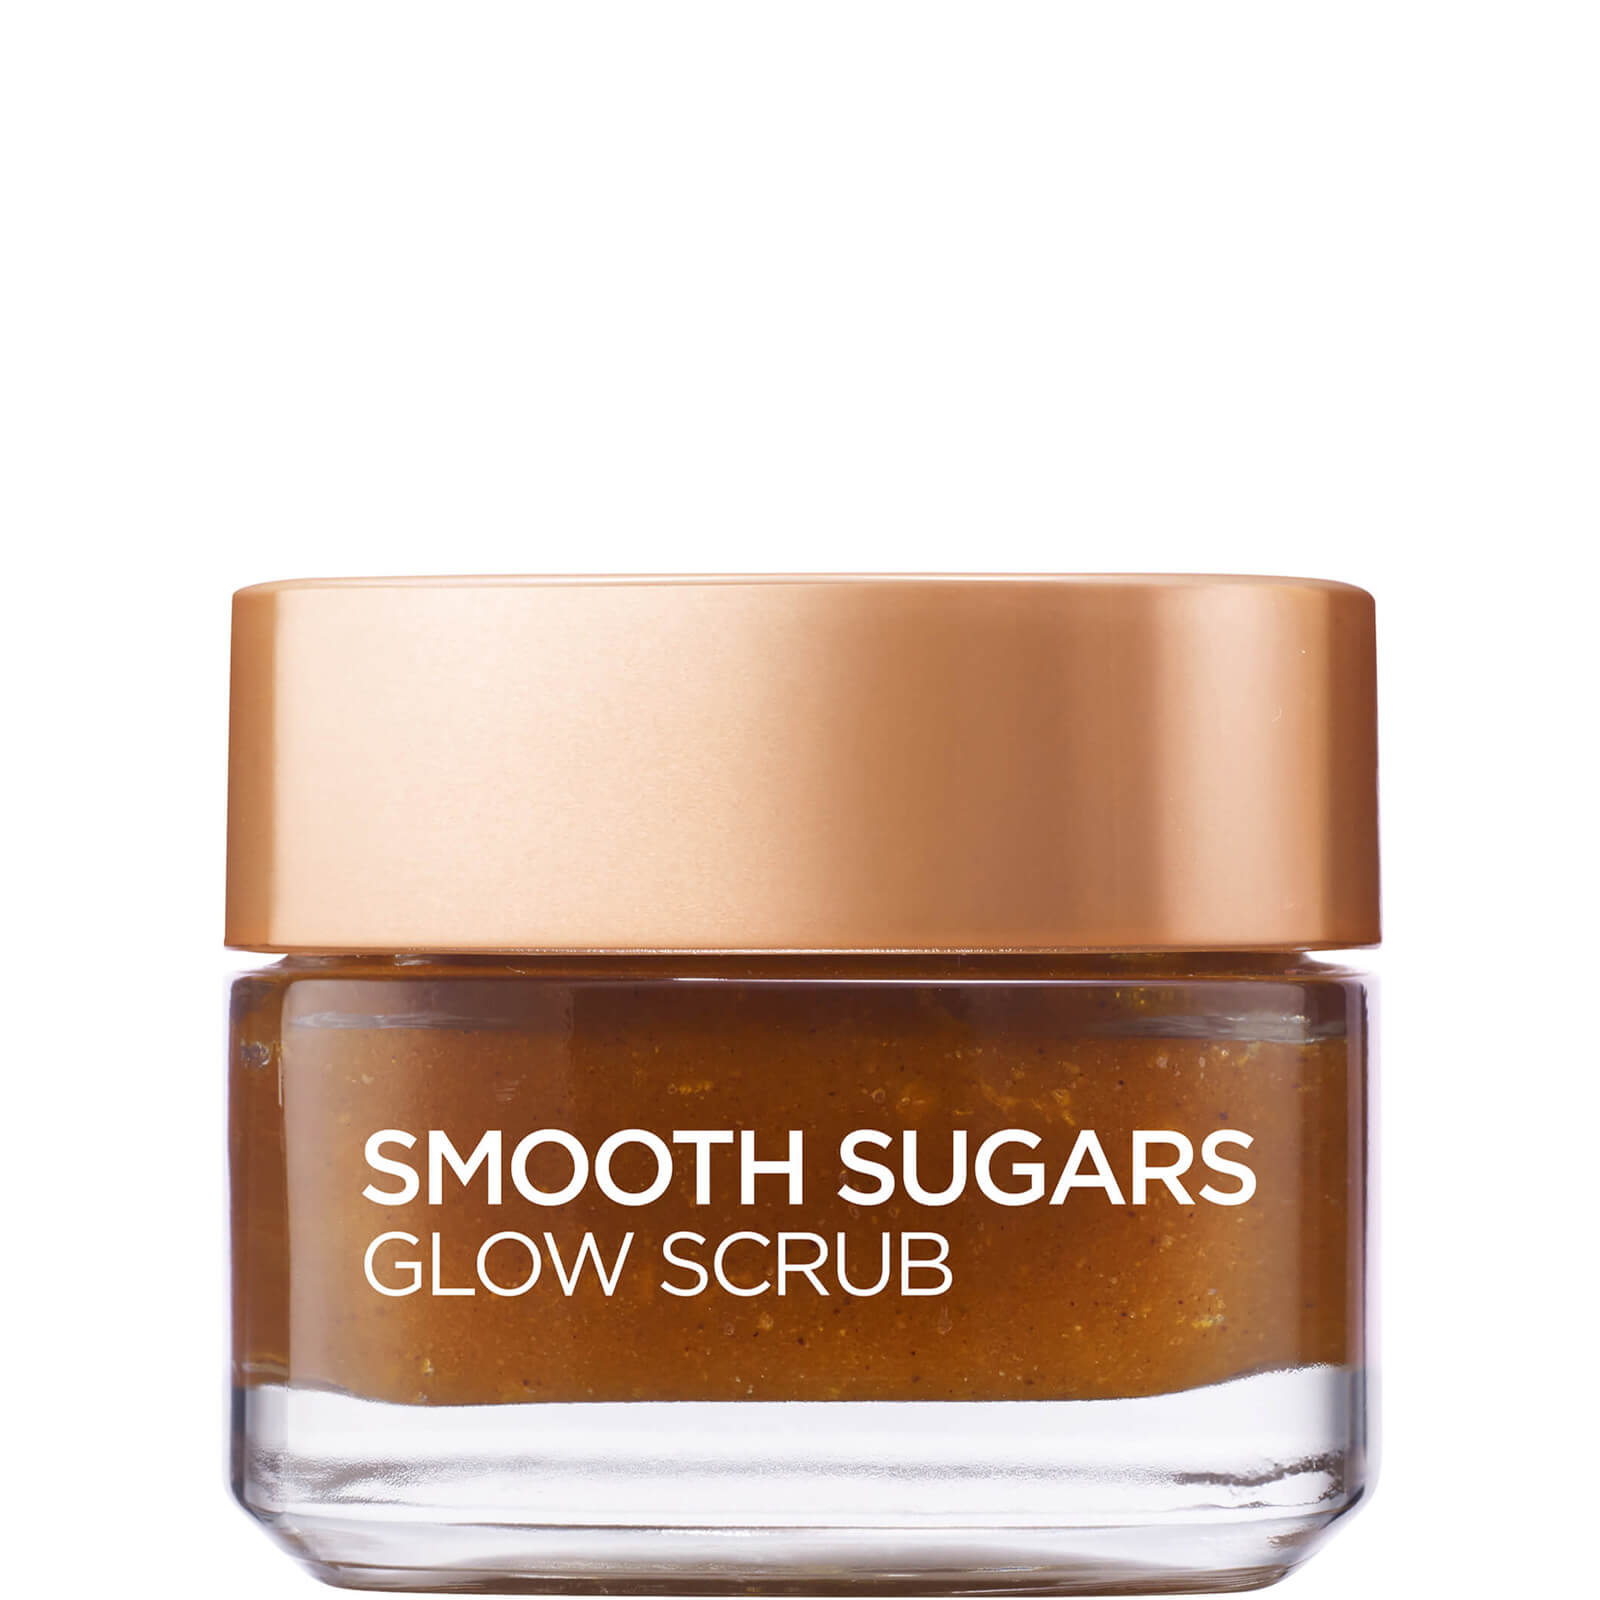 Photos - Facial / Body Cleansing Product LOreal L'Oréal Paris Smooth Sugars Glowing Sugar Scrub 50ml A9435000 